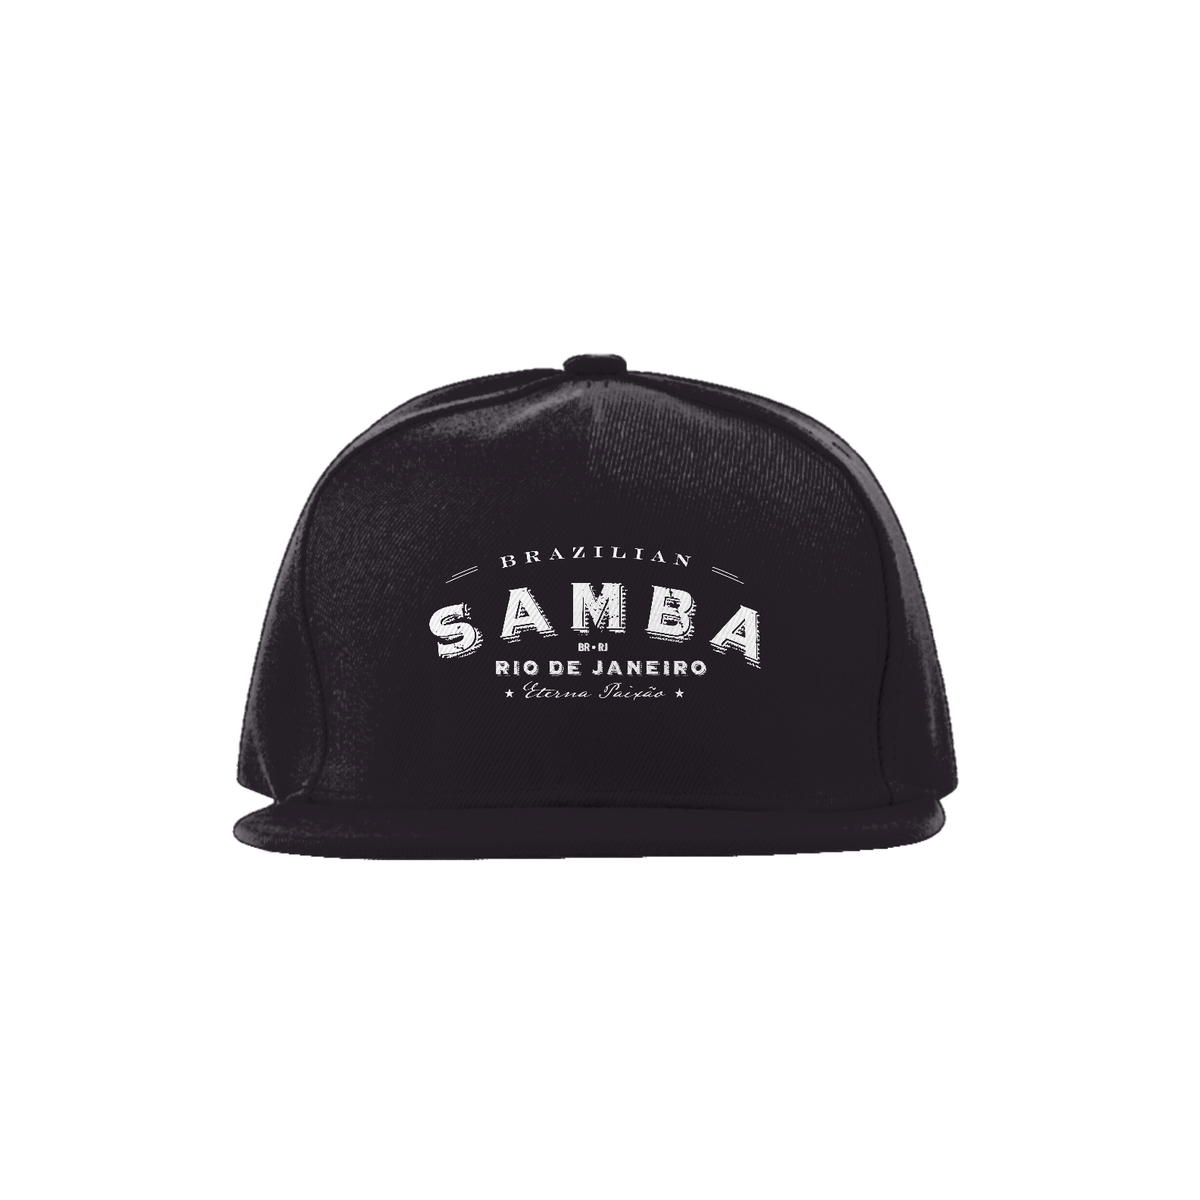 Nome do produto: Samba Brasil